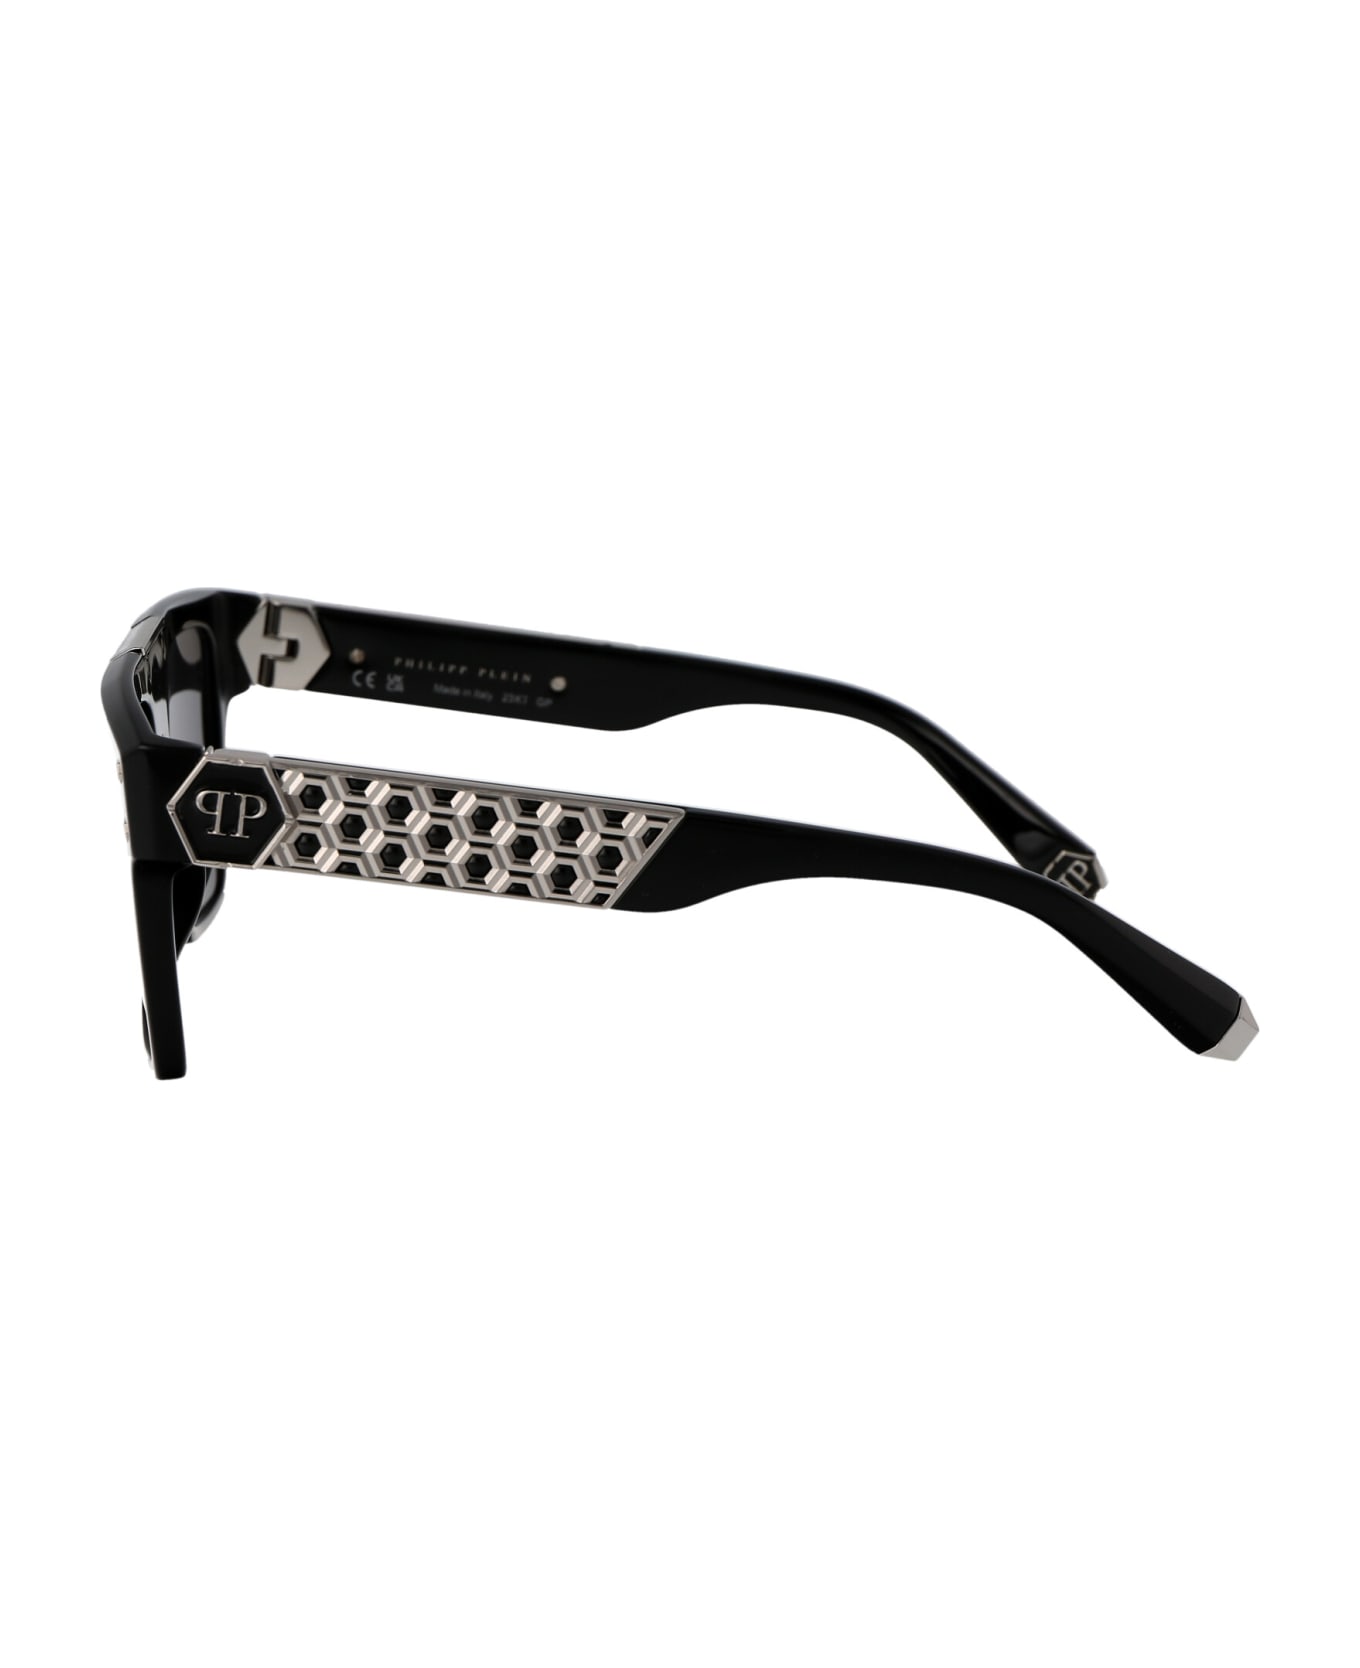 Philipp Plein Spp080 Sunglasses - 700W BLACK